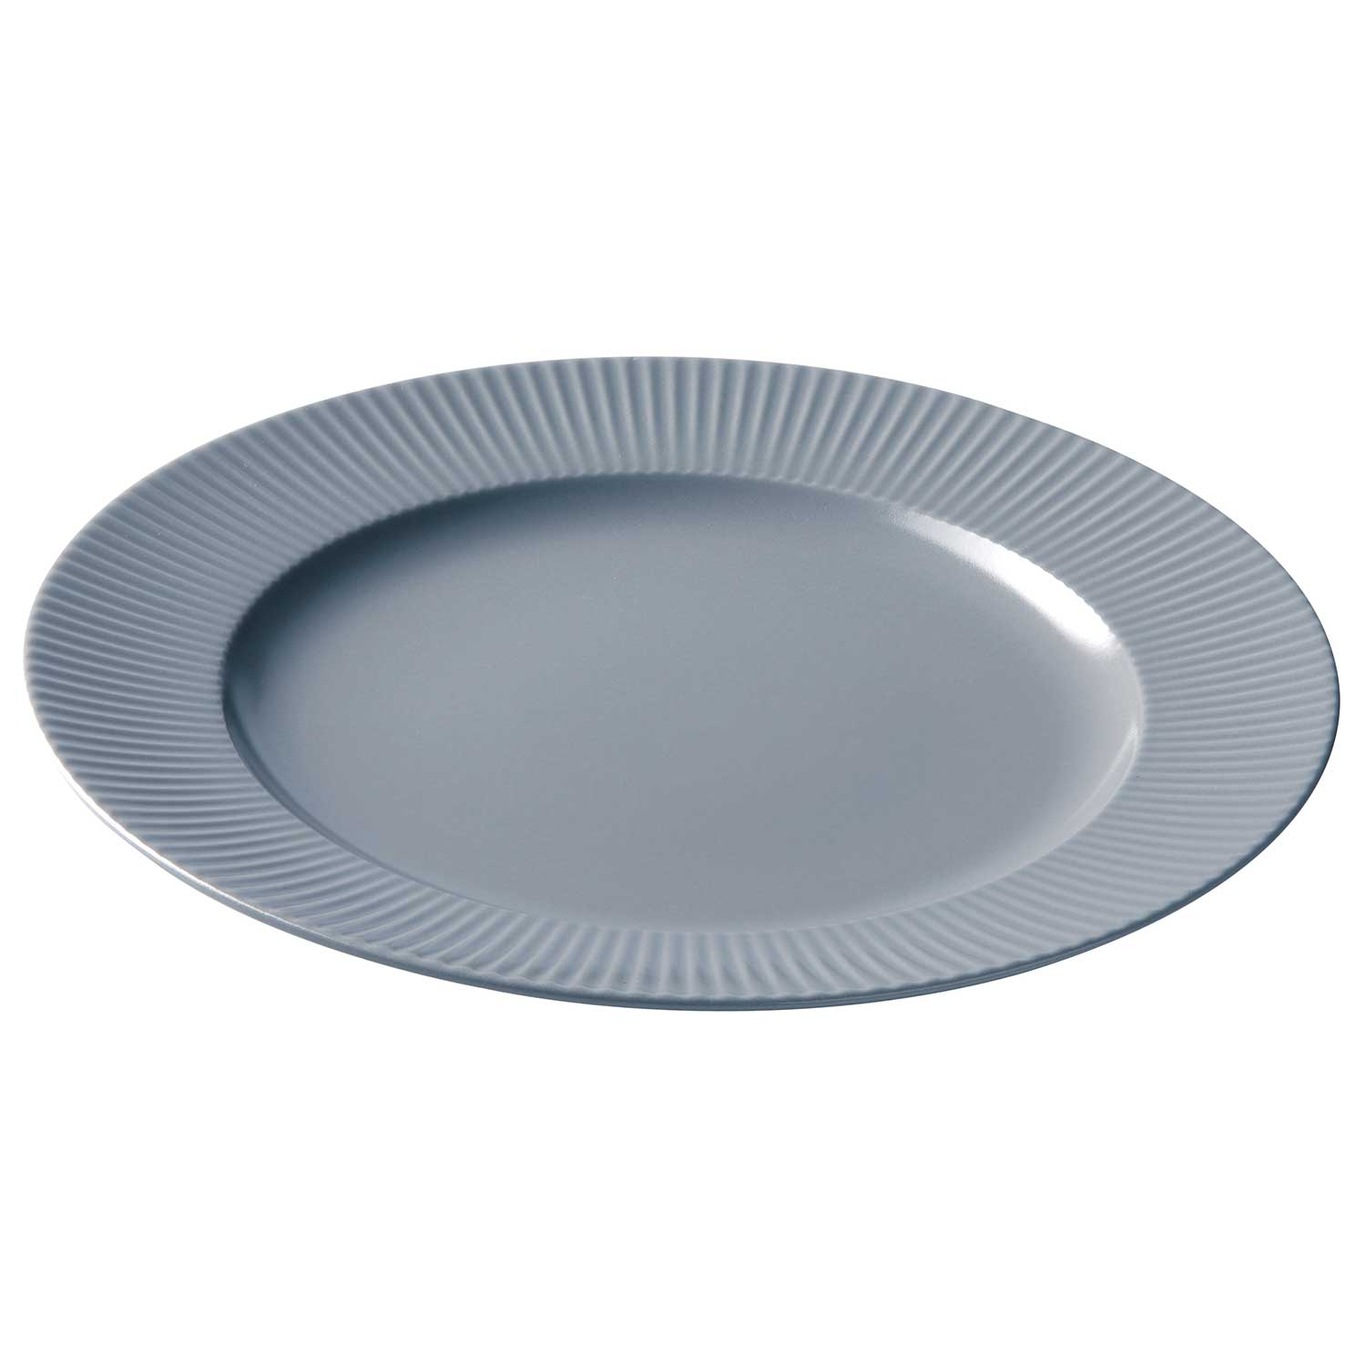 Groovy Dinner Plate 27 cm, Grey